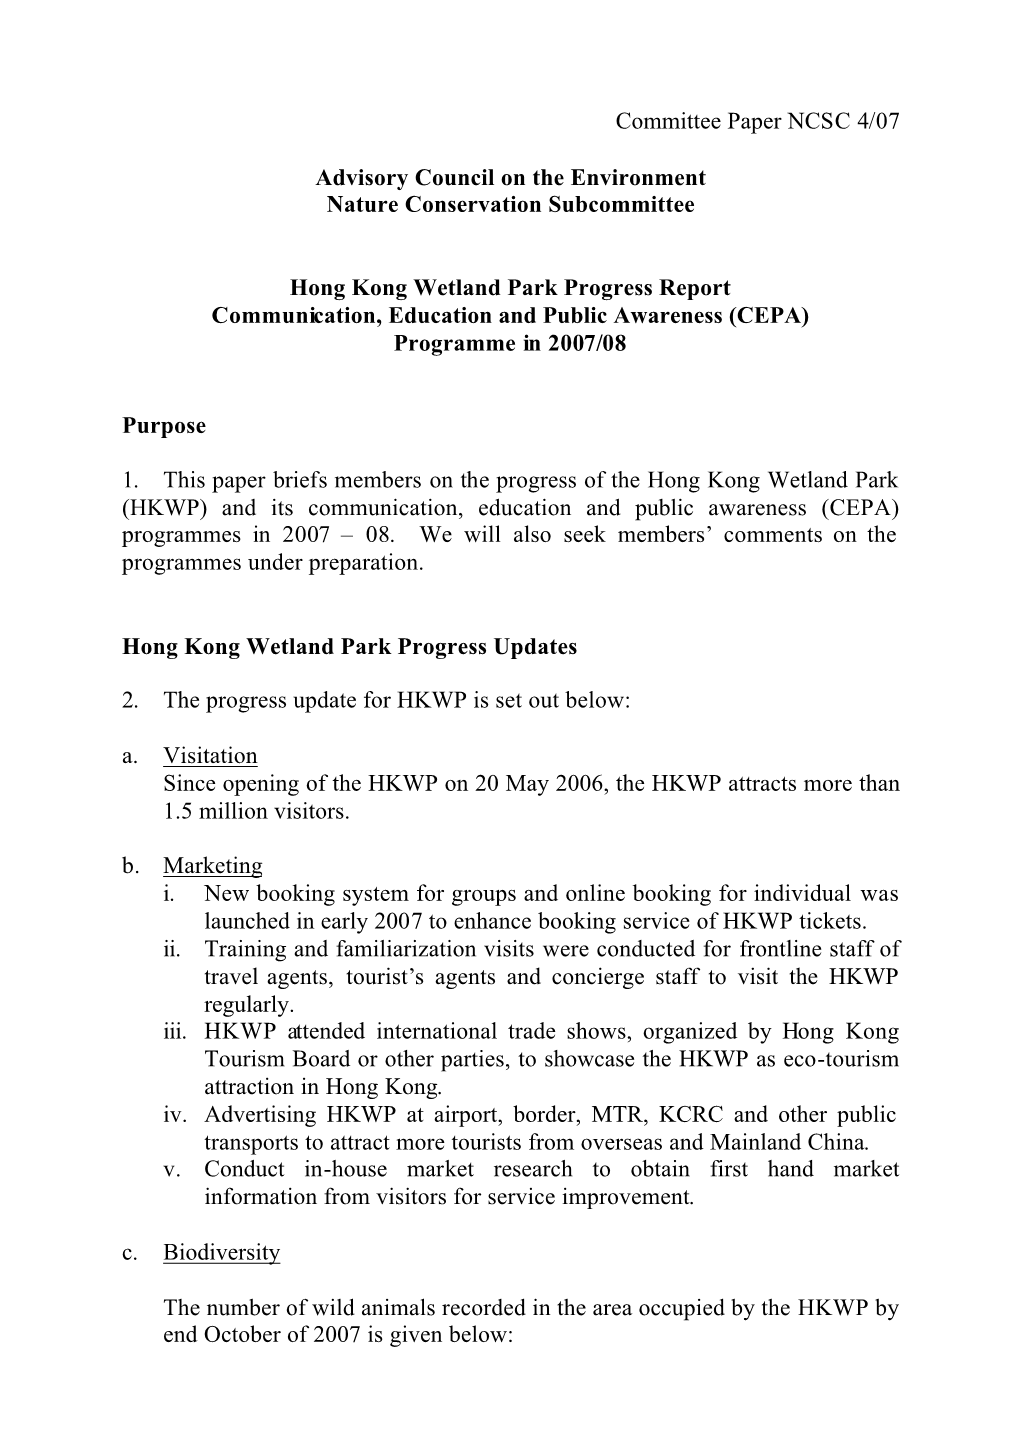 Hong Kong Wetland Park Progress Report Communication, Education and Public Awareness (CEPA) Programme in 2007/08